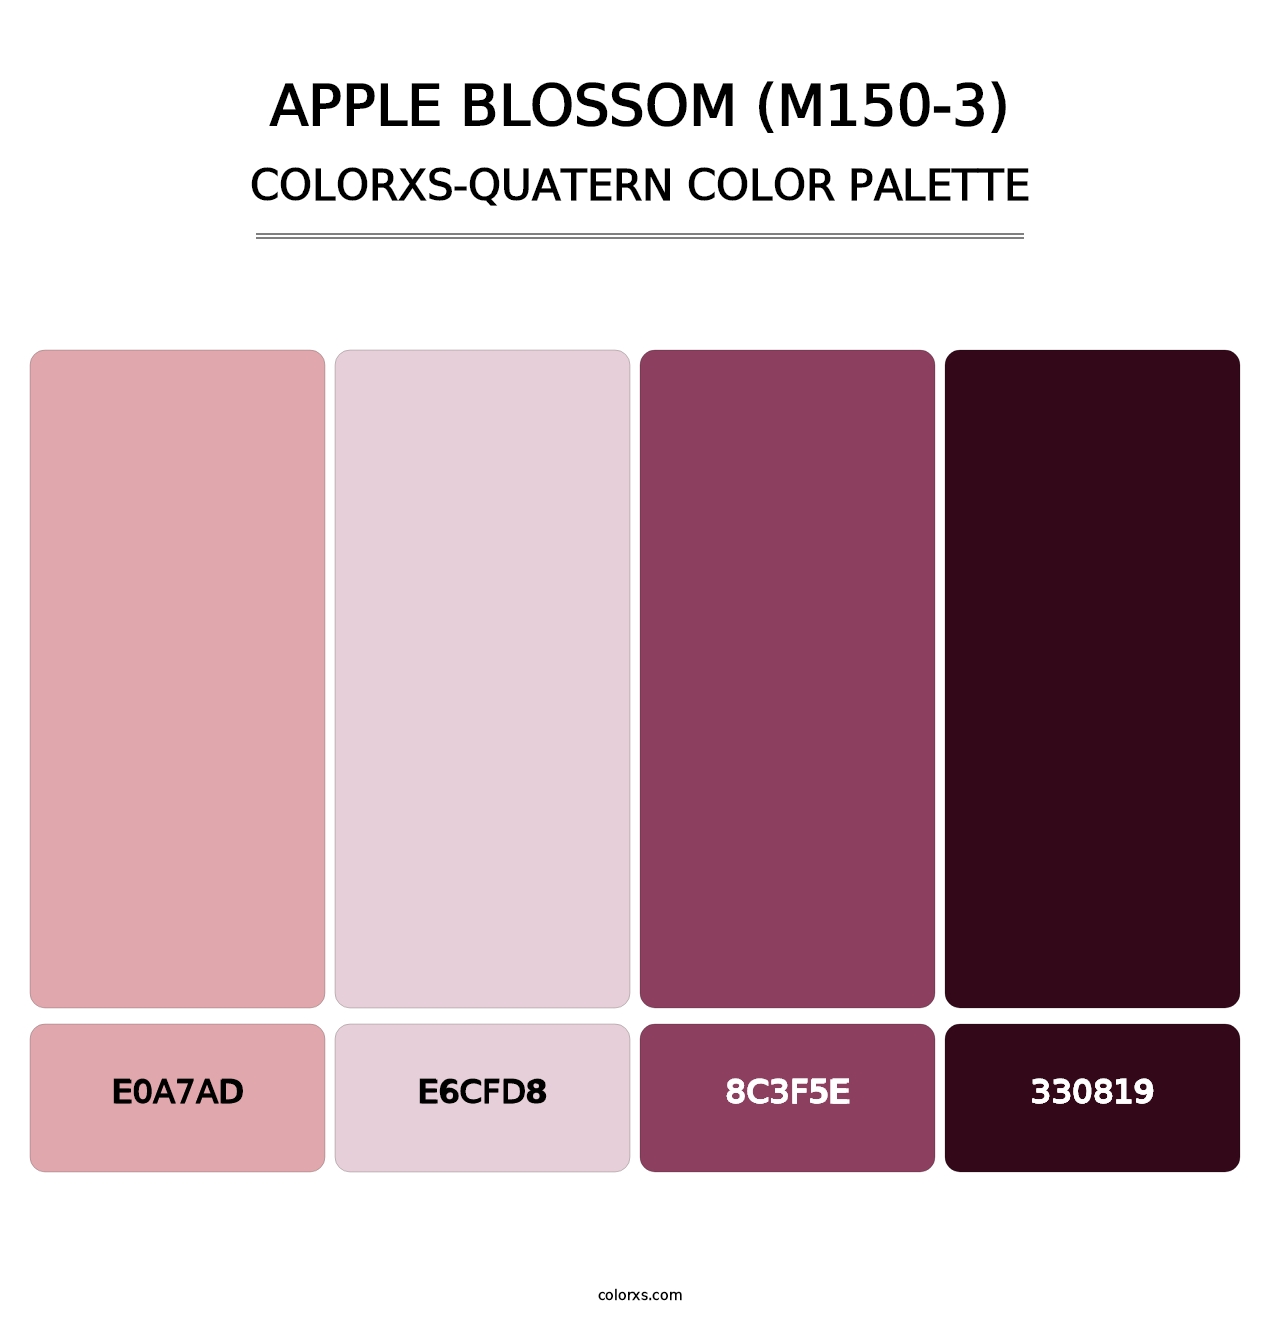 Apple Blossom (M150-3) - Colorxs Quatern Palette